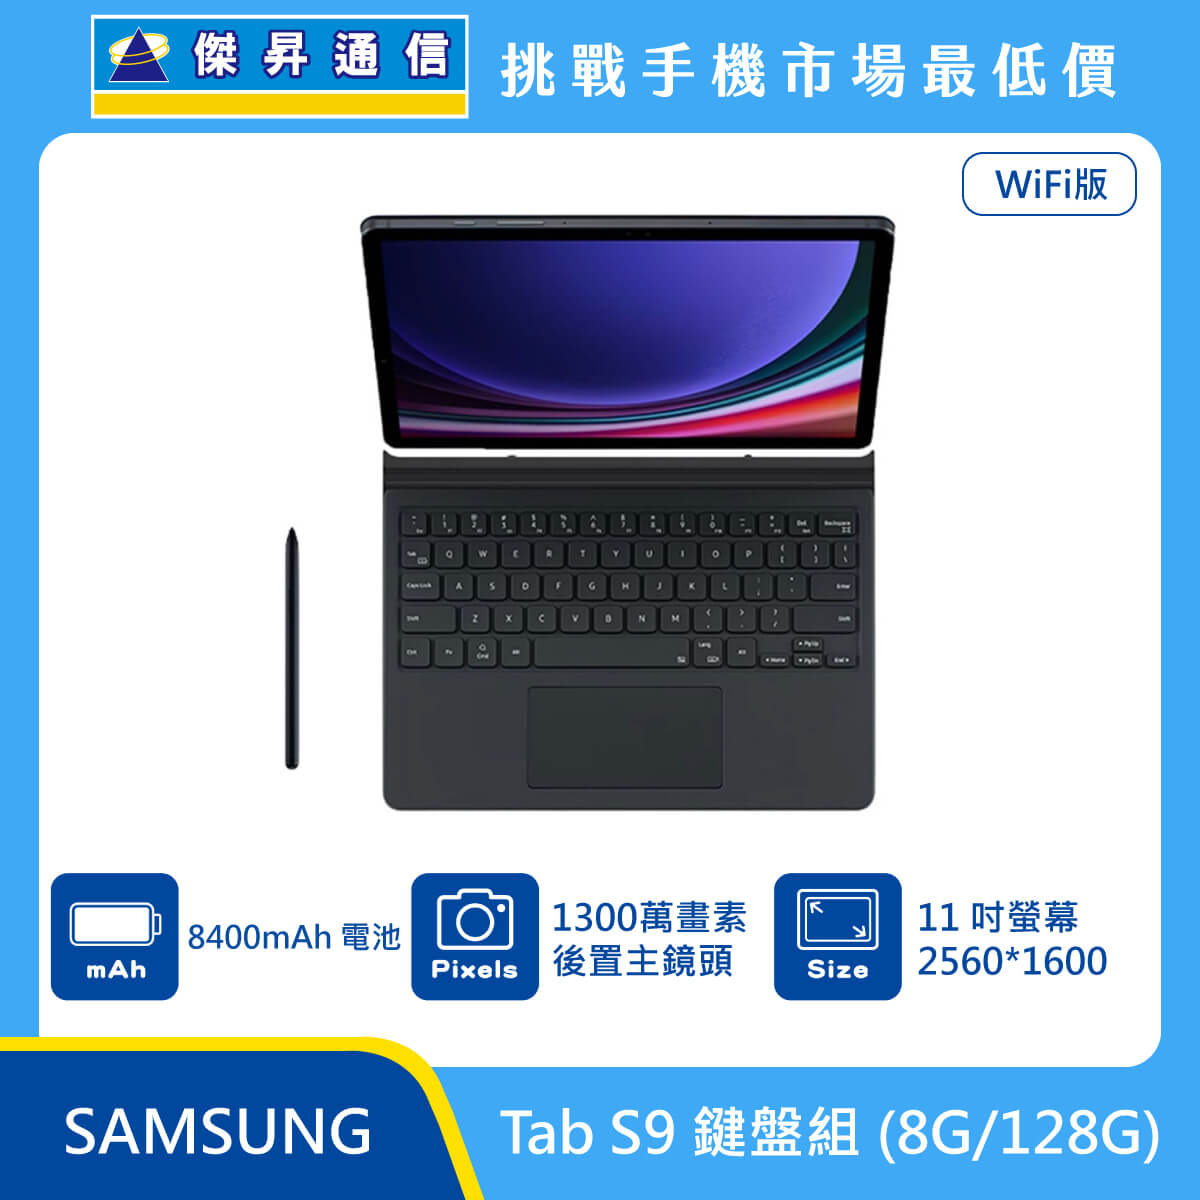 SAMSUNG 平板 Tab S9 Wi-Fi (8G/128G)鍵盤組